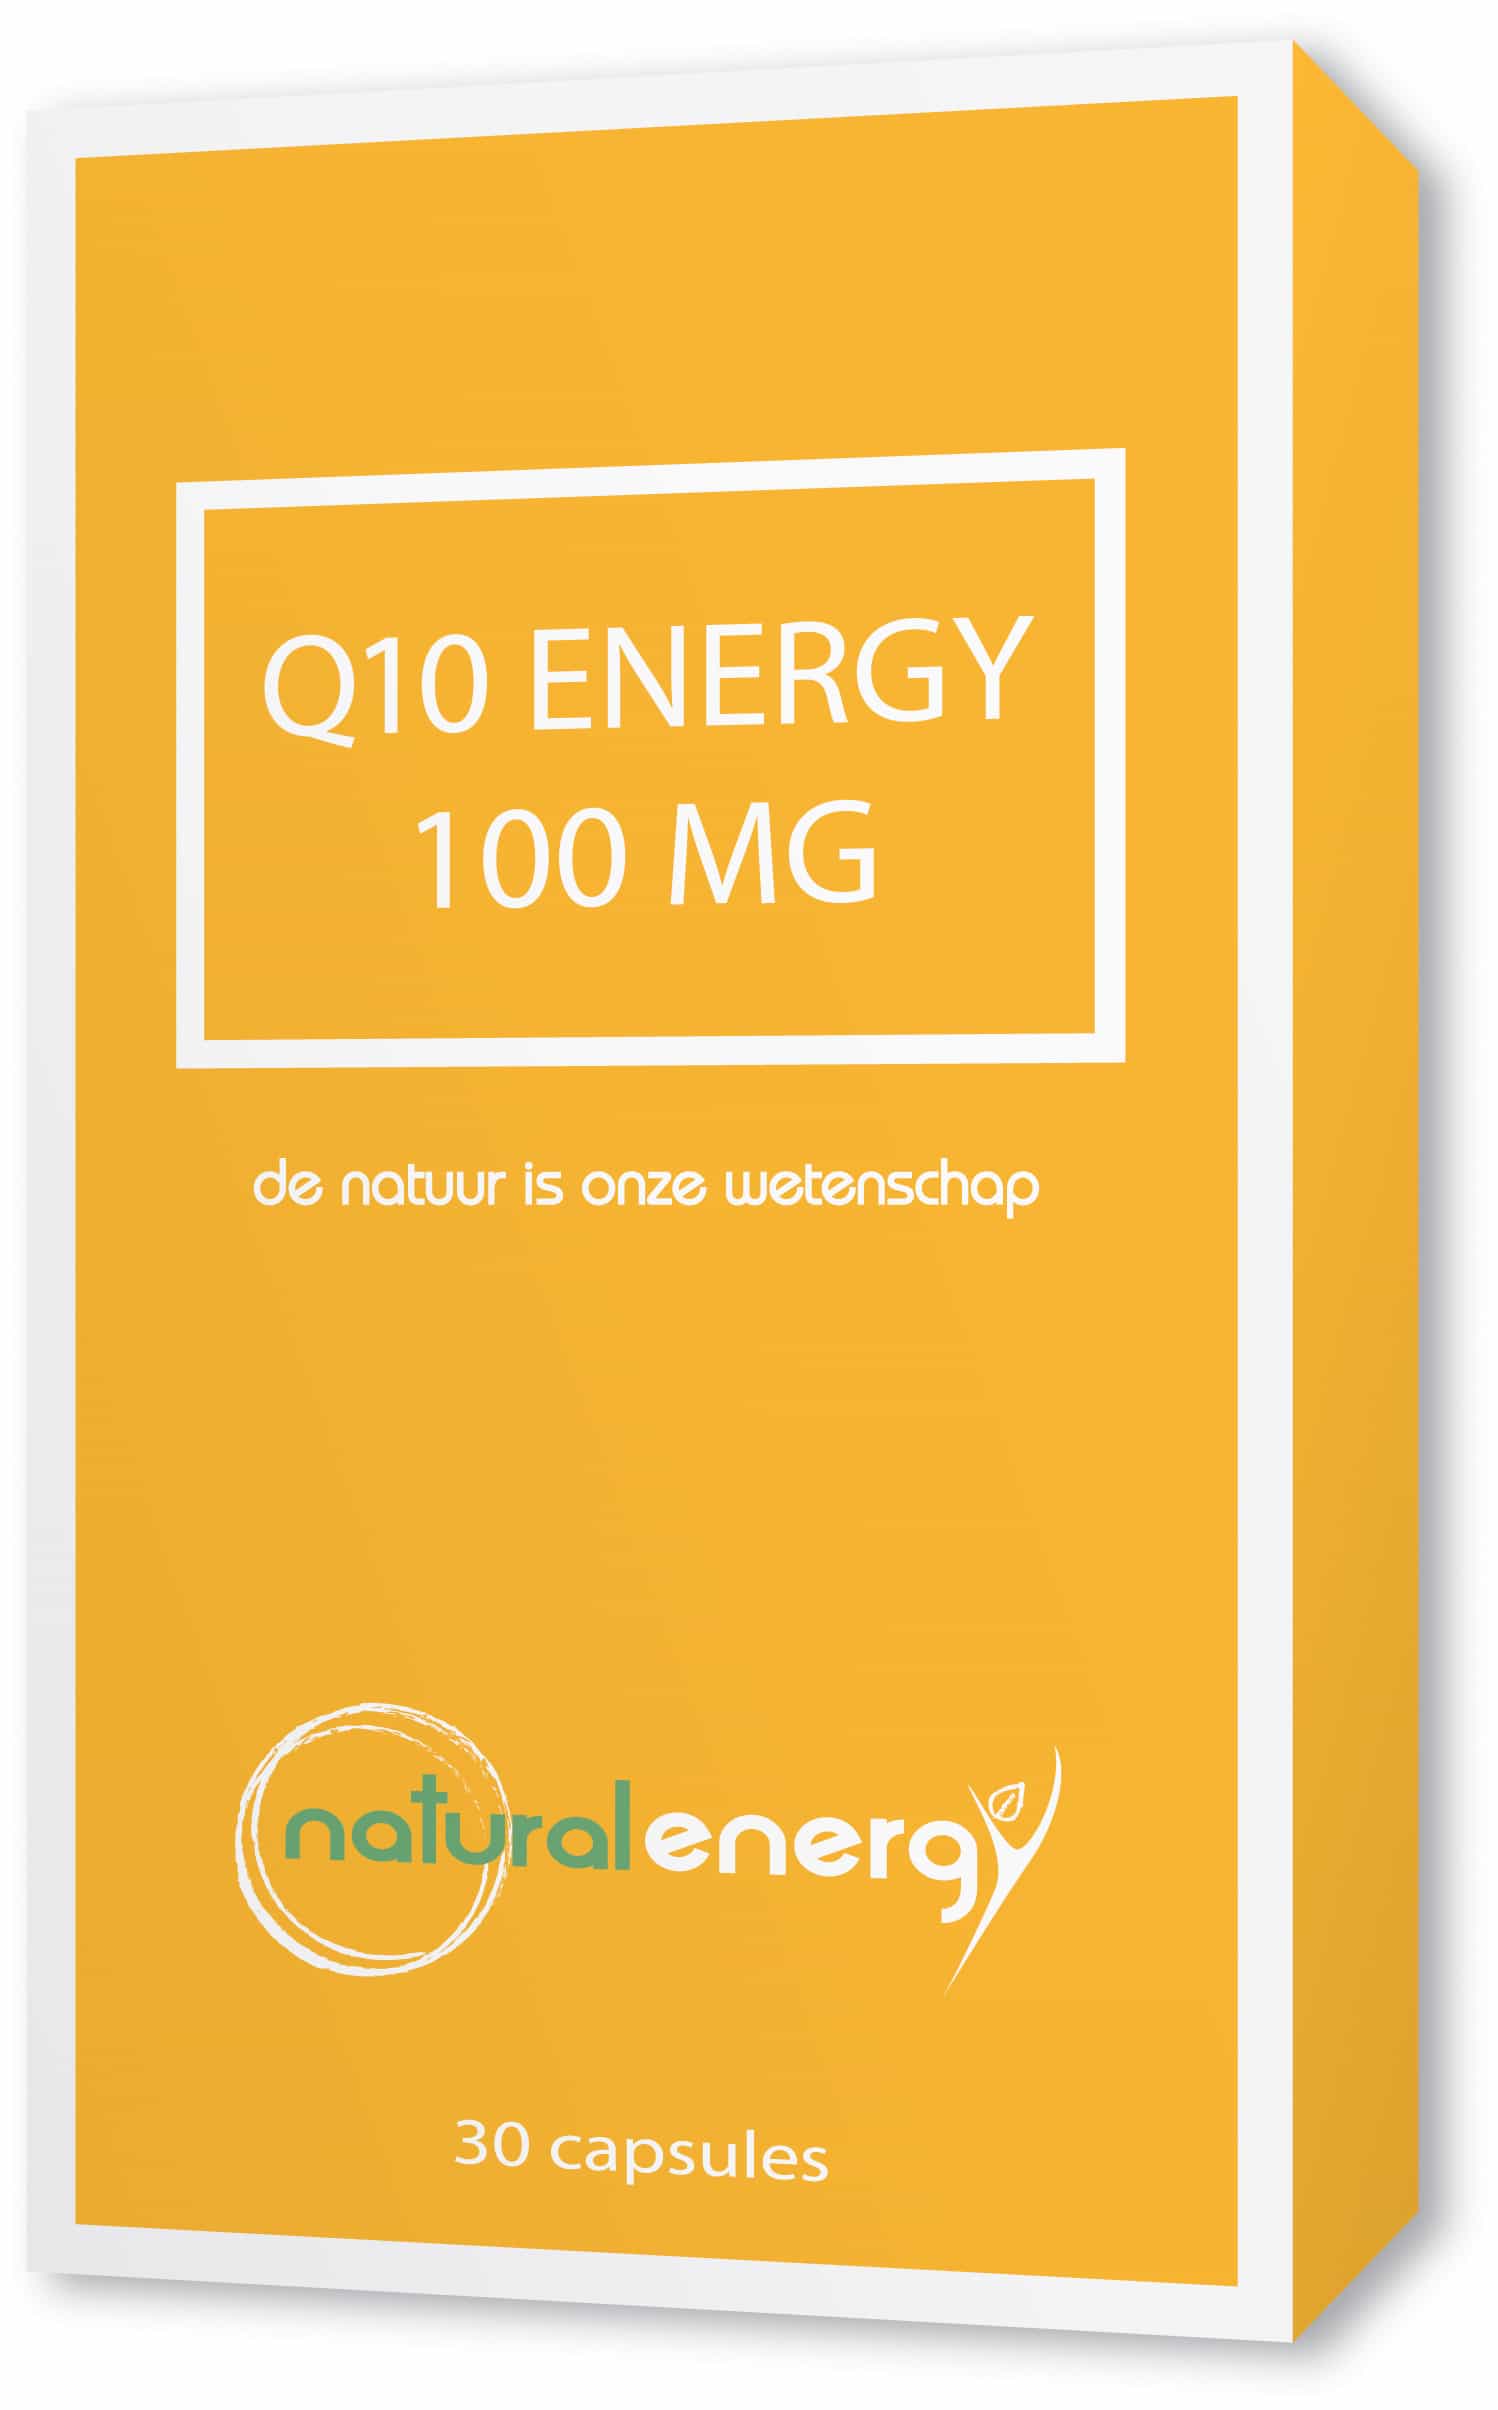 Natural Energy Q10 Energy 100 mg